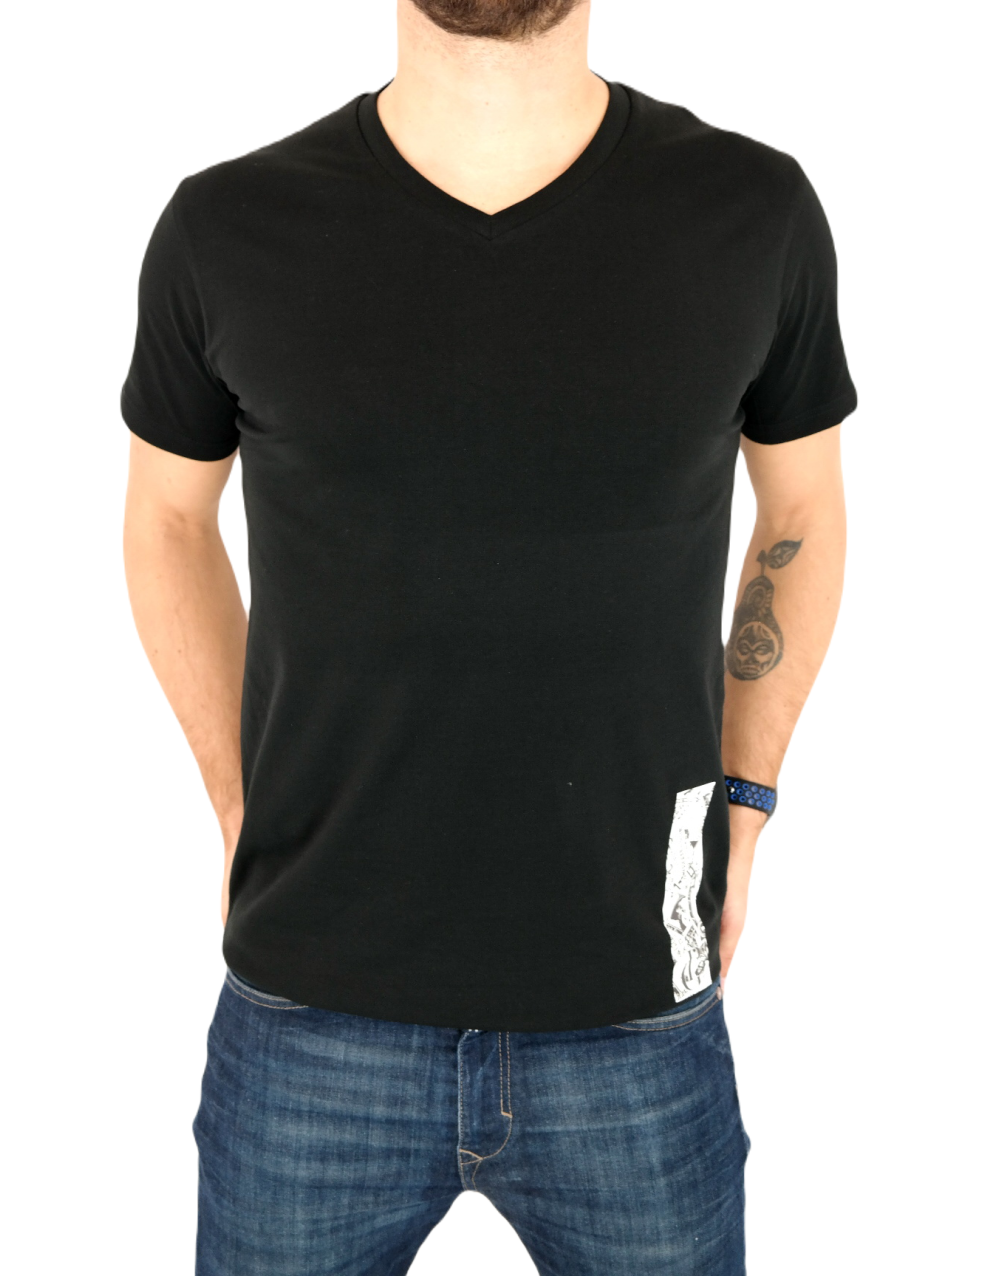 GIOVANNI PERA T-shirt męski czarny TGP74 w szpic, serek , dolary, elastan